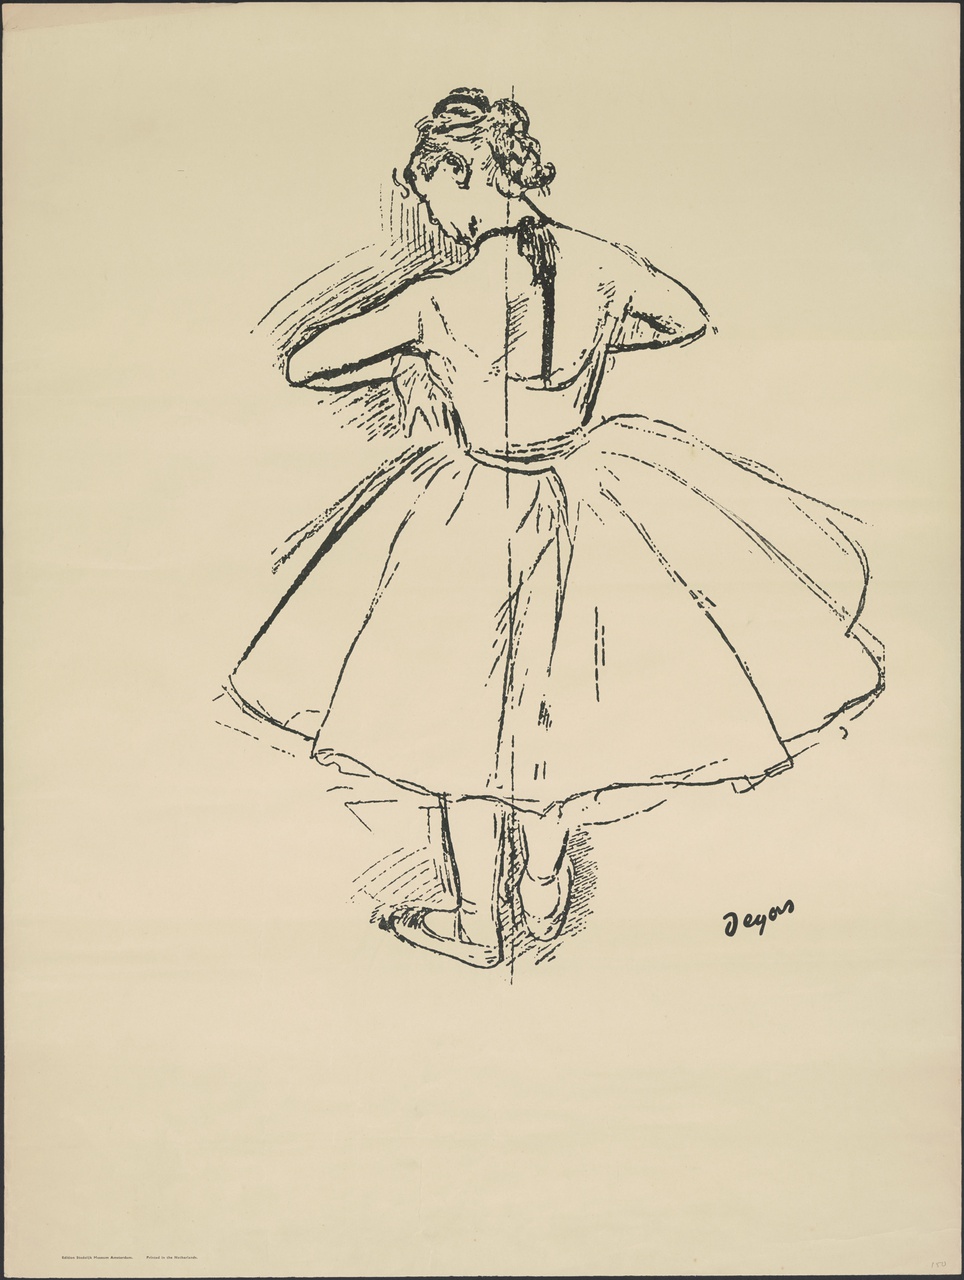 Balletdanseres van Degas